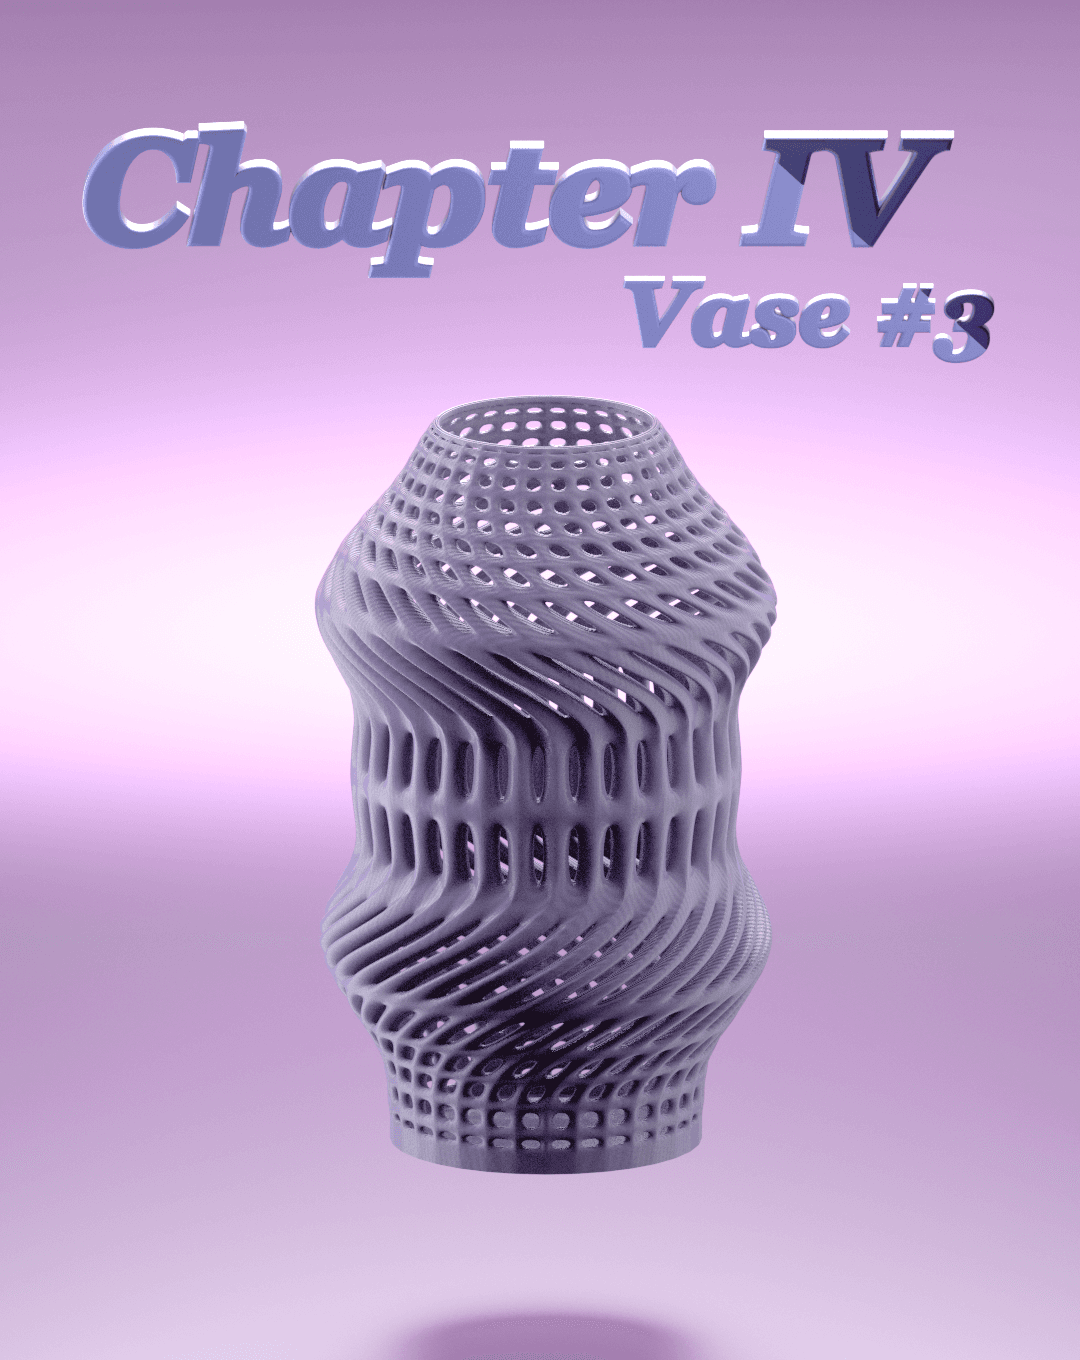 C4 Vase #3 3d model